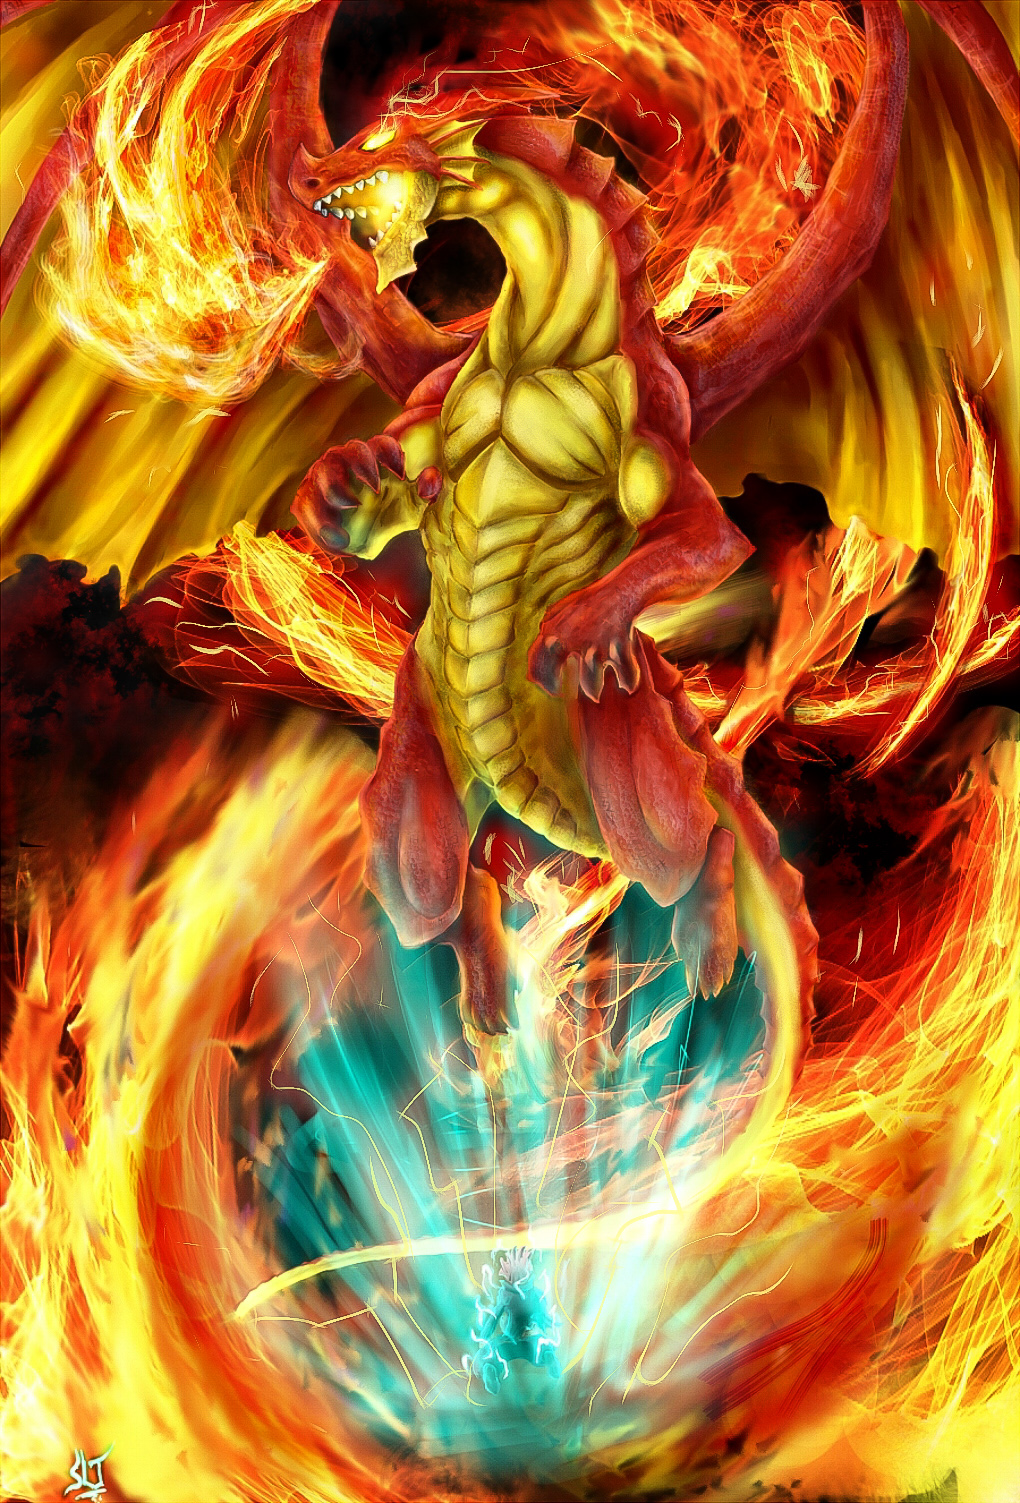 Igneel the king of fire dragons by gossj10 on DeviantArt